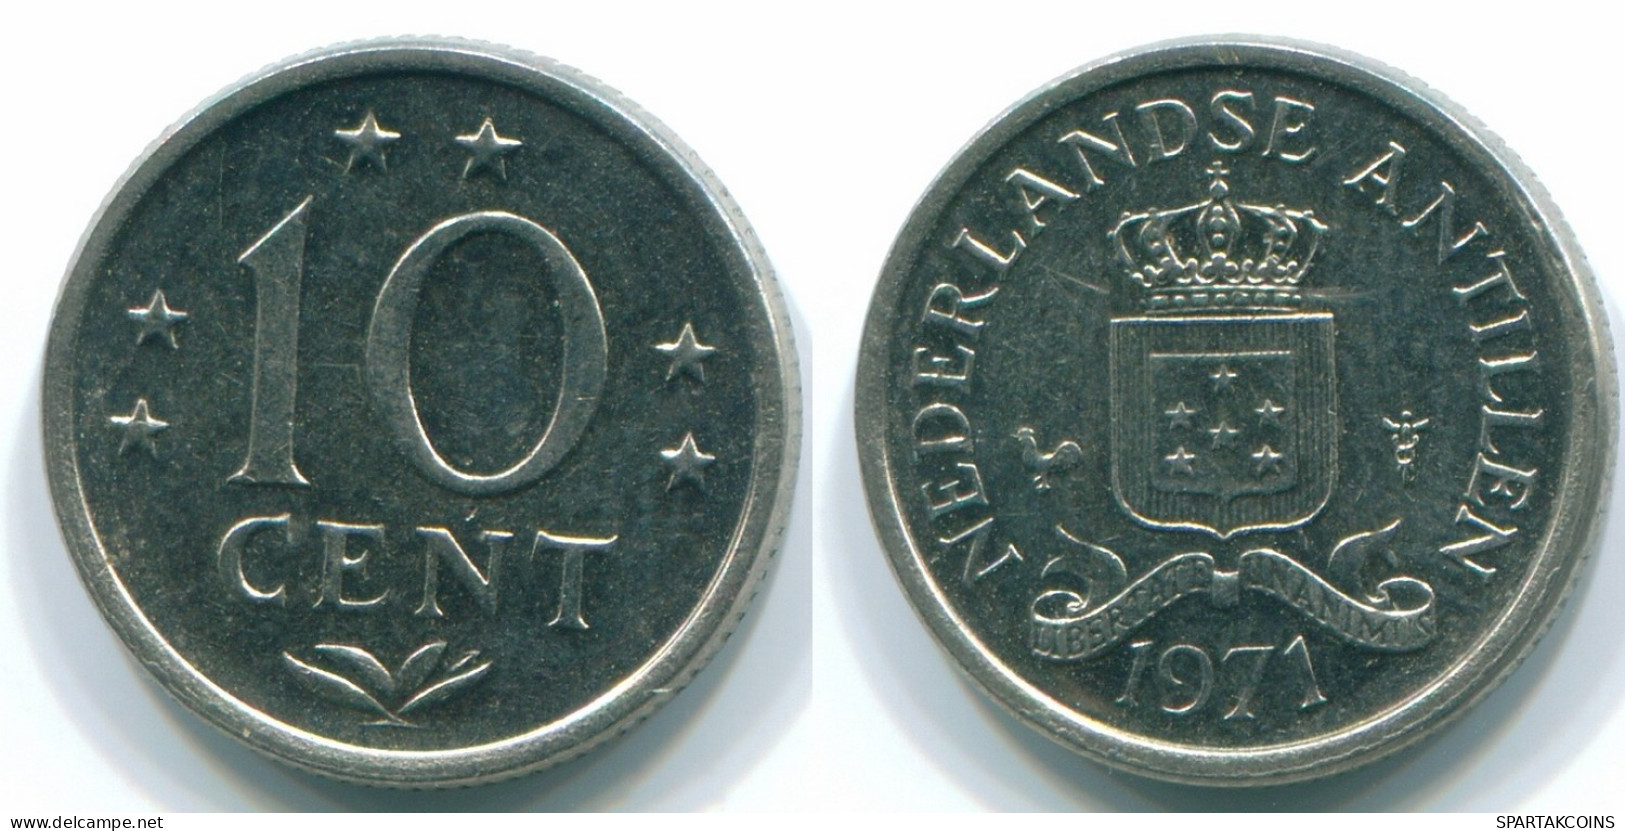 10 CENTS 1971 NIEDERLÄNDISCHE ANTILLEN Nickel Koloniale Münze #S13388.D.A - Netherlands Antilles